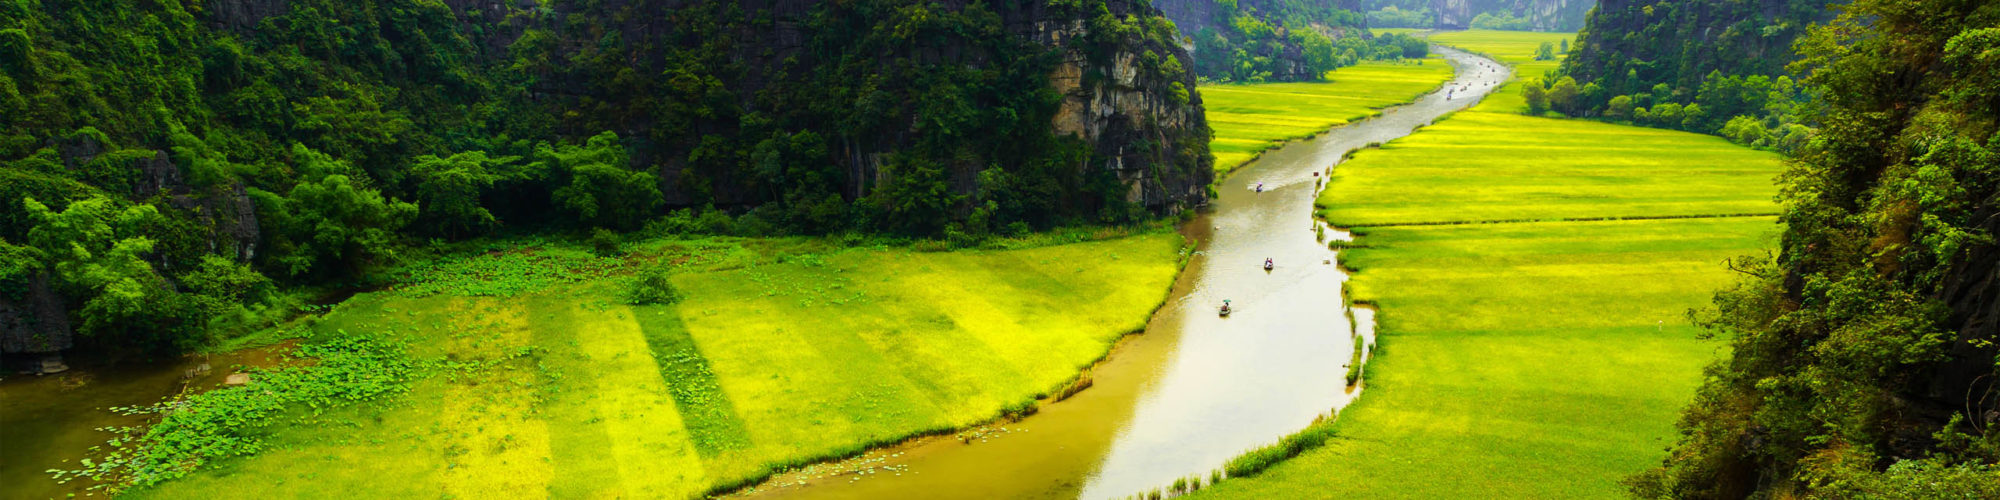 Vietnam travel agents packages deals